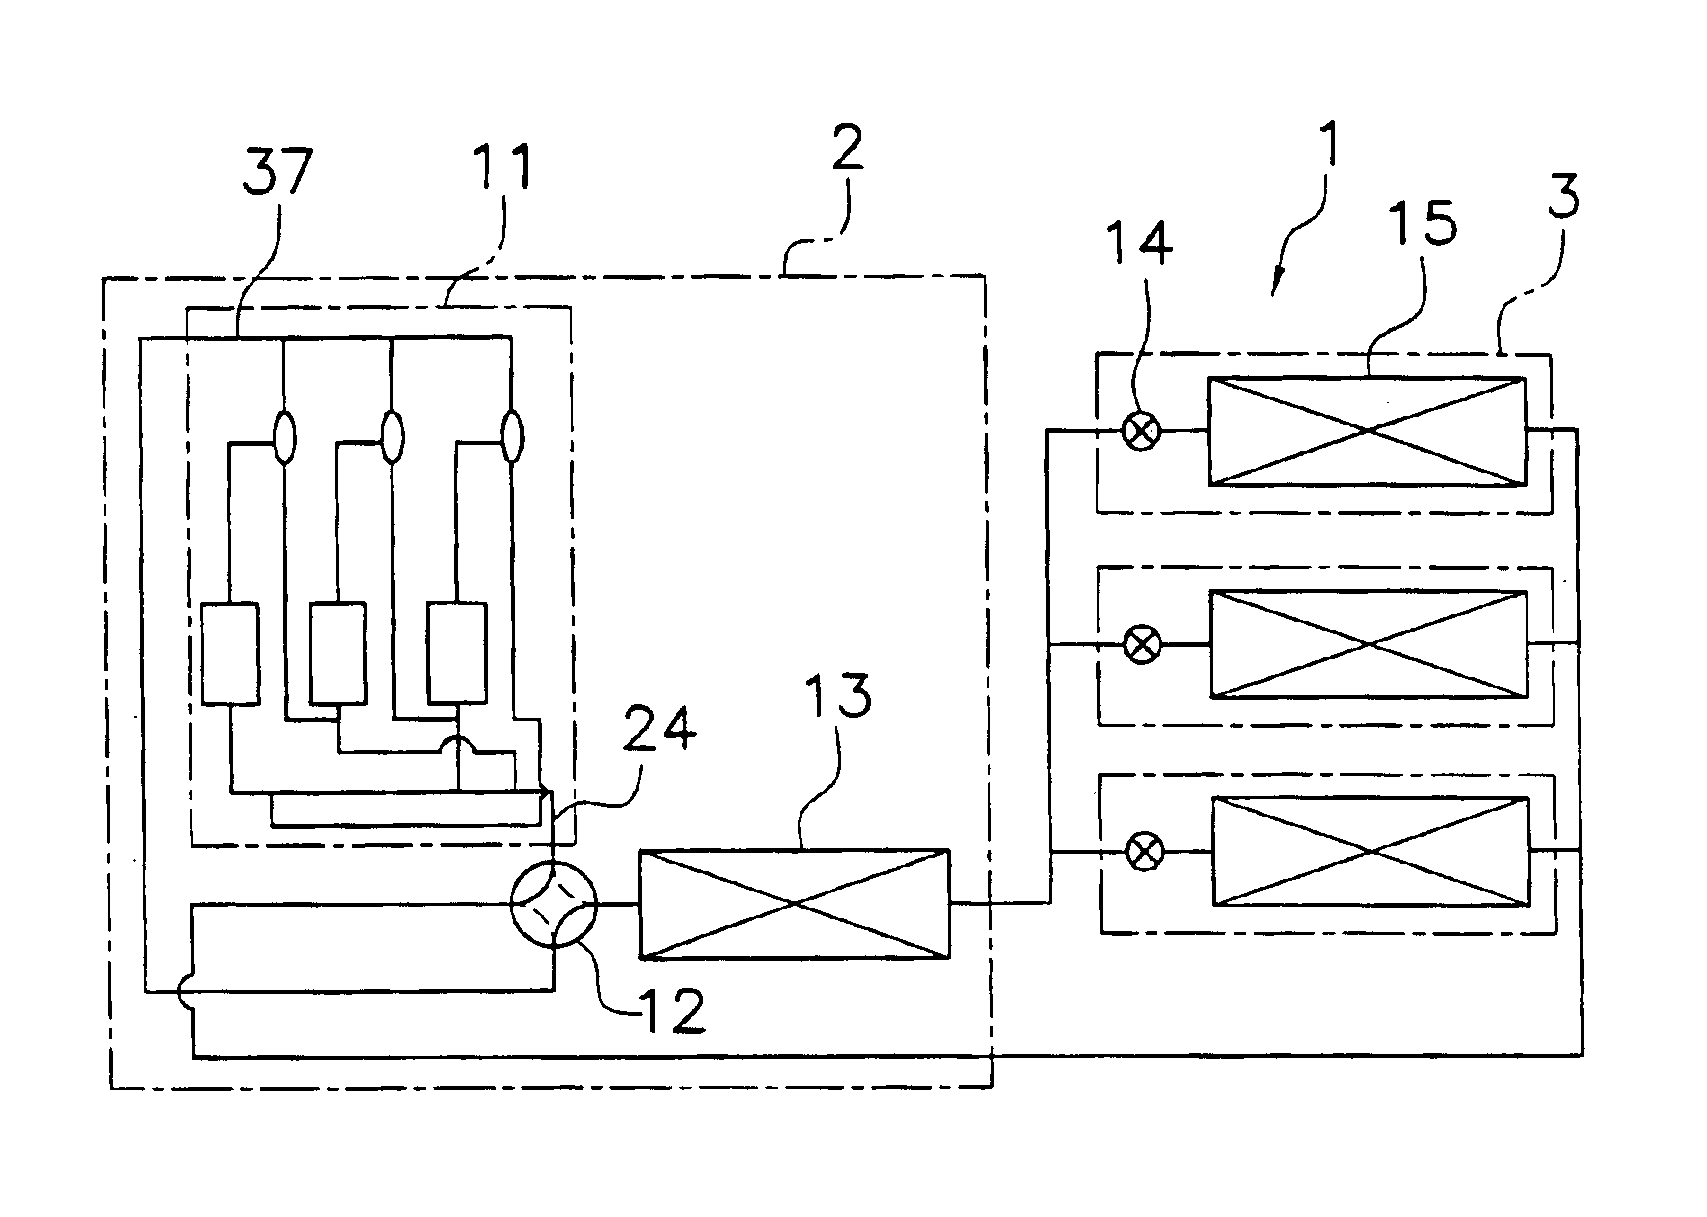 Compression mechanism for refrigeration system